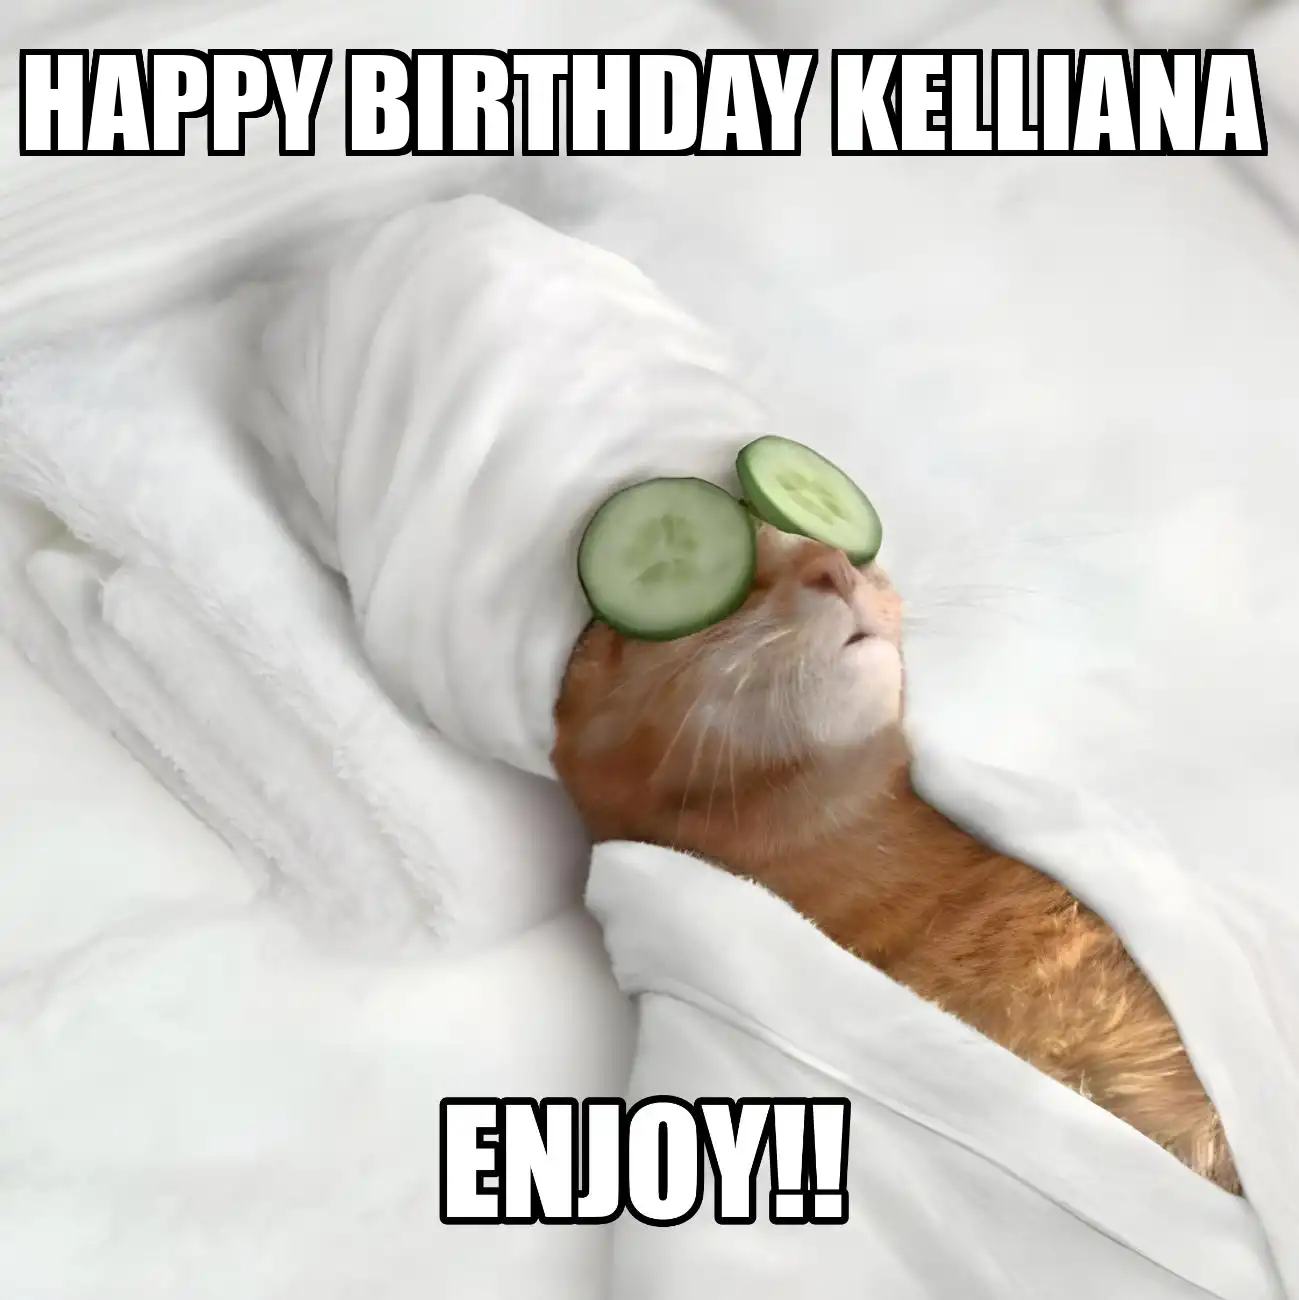 Happy Birthday Kelliana Enjoy Cat Meme